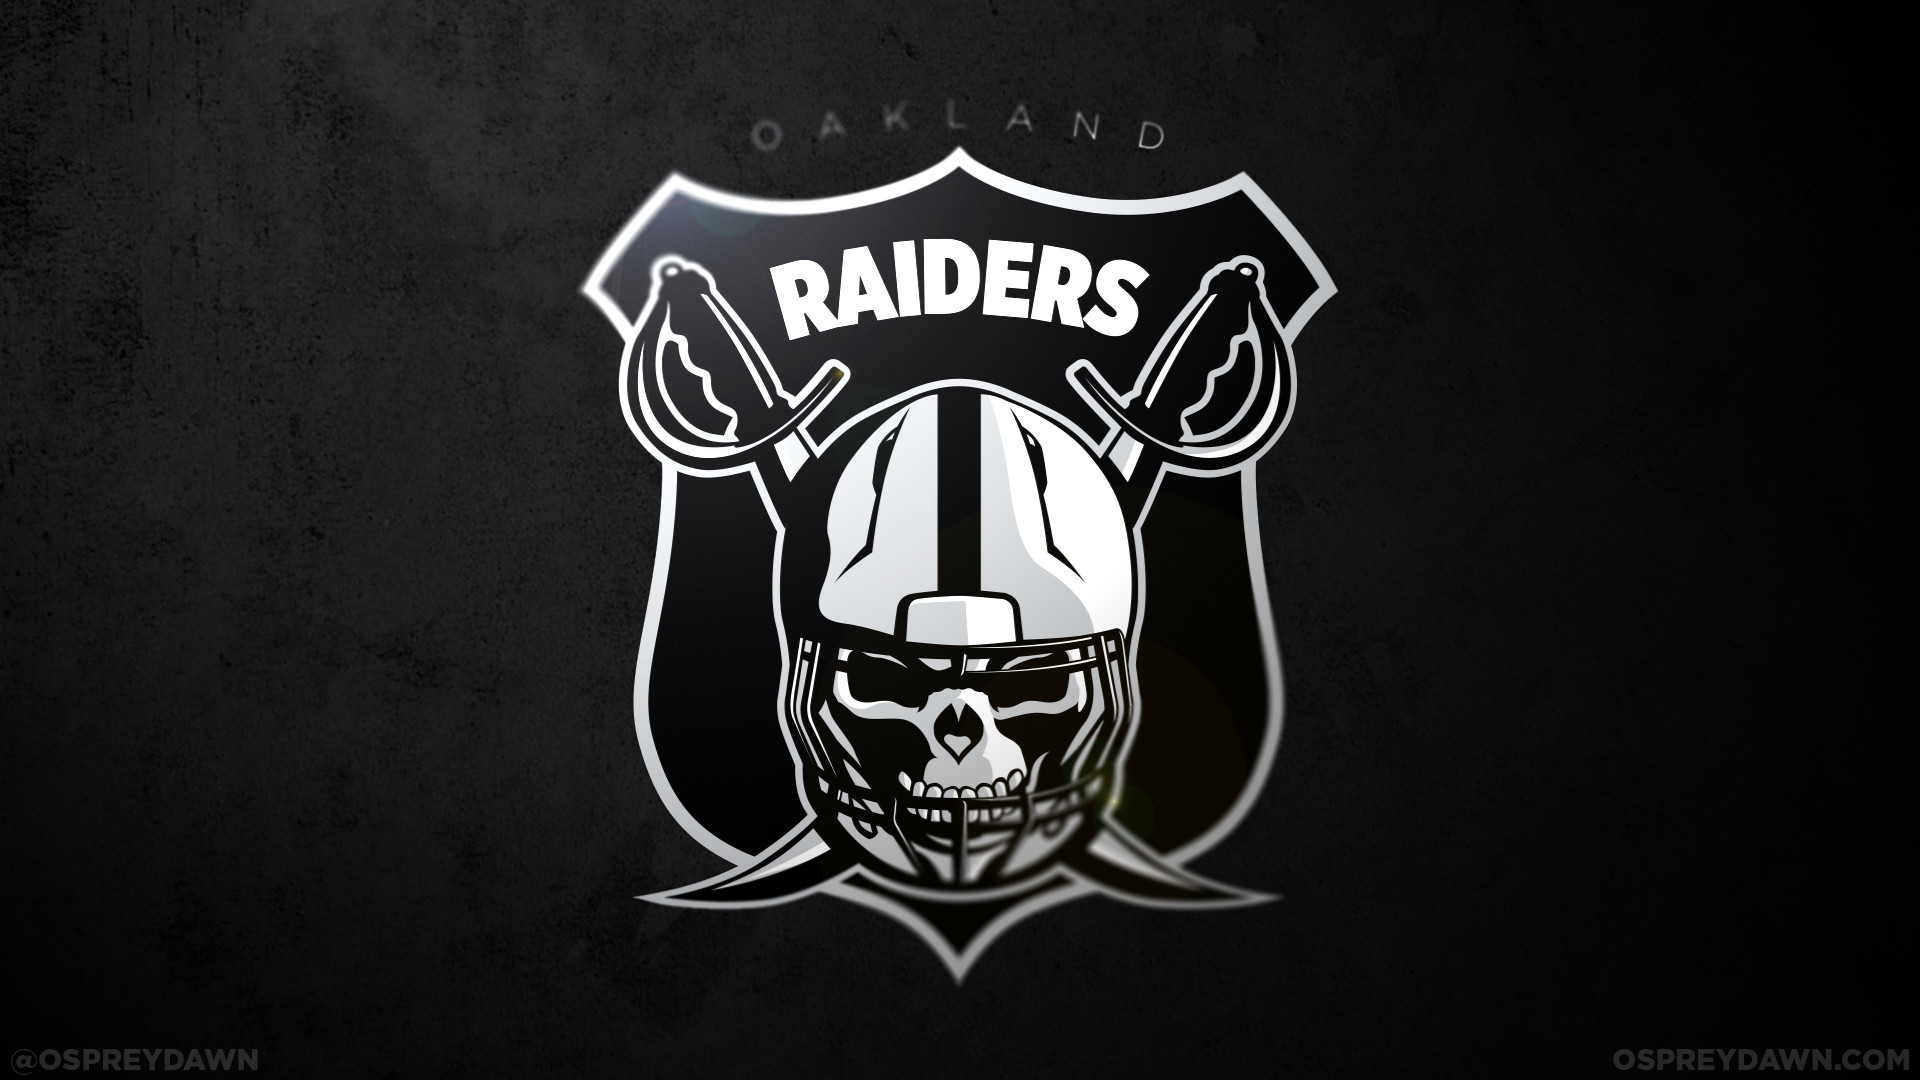 Oakland Raiders Logo drawing free image download